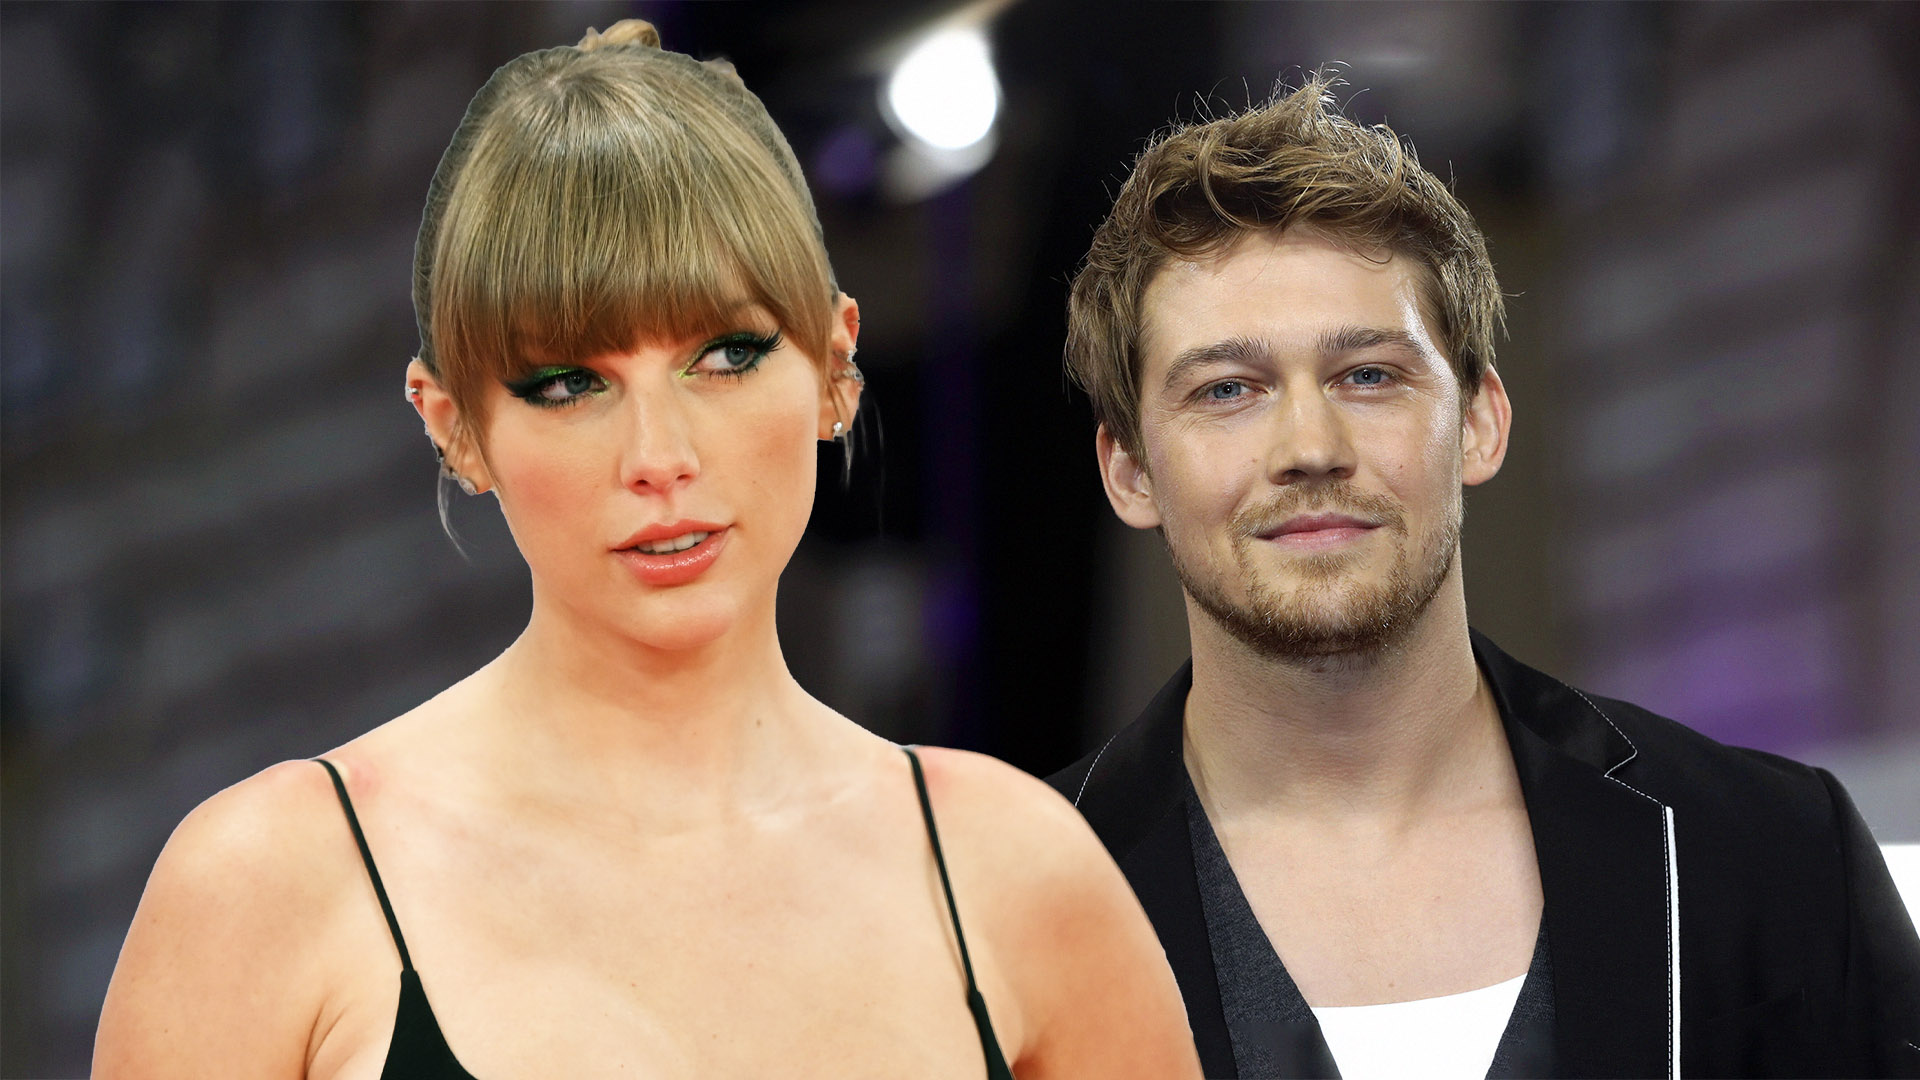 Why Do Taylor Swift Fans Think Joe Alwyn Cheated on the Singer?